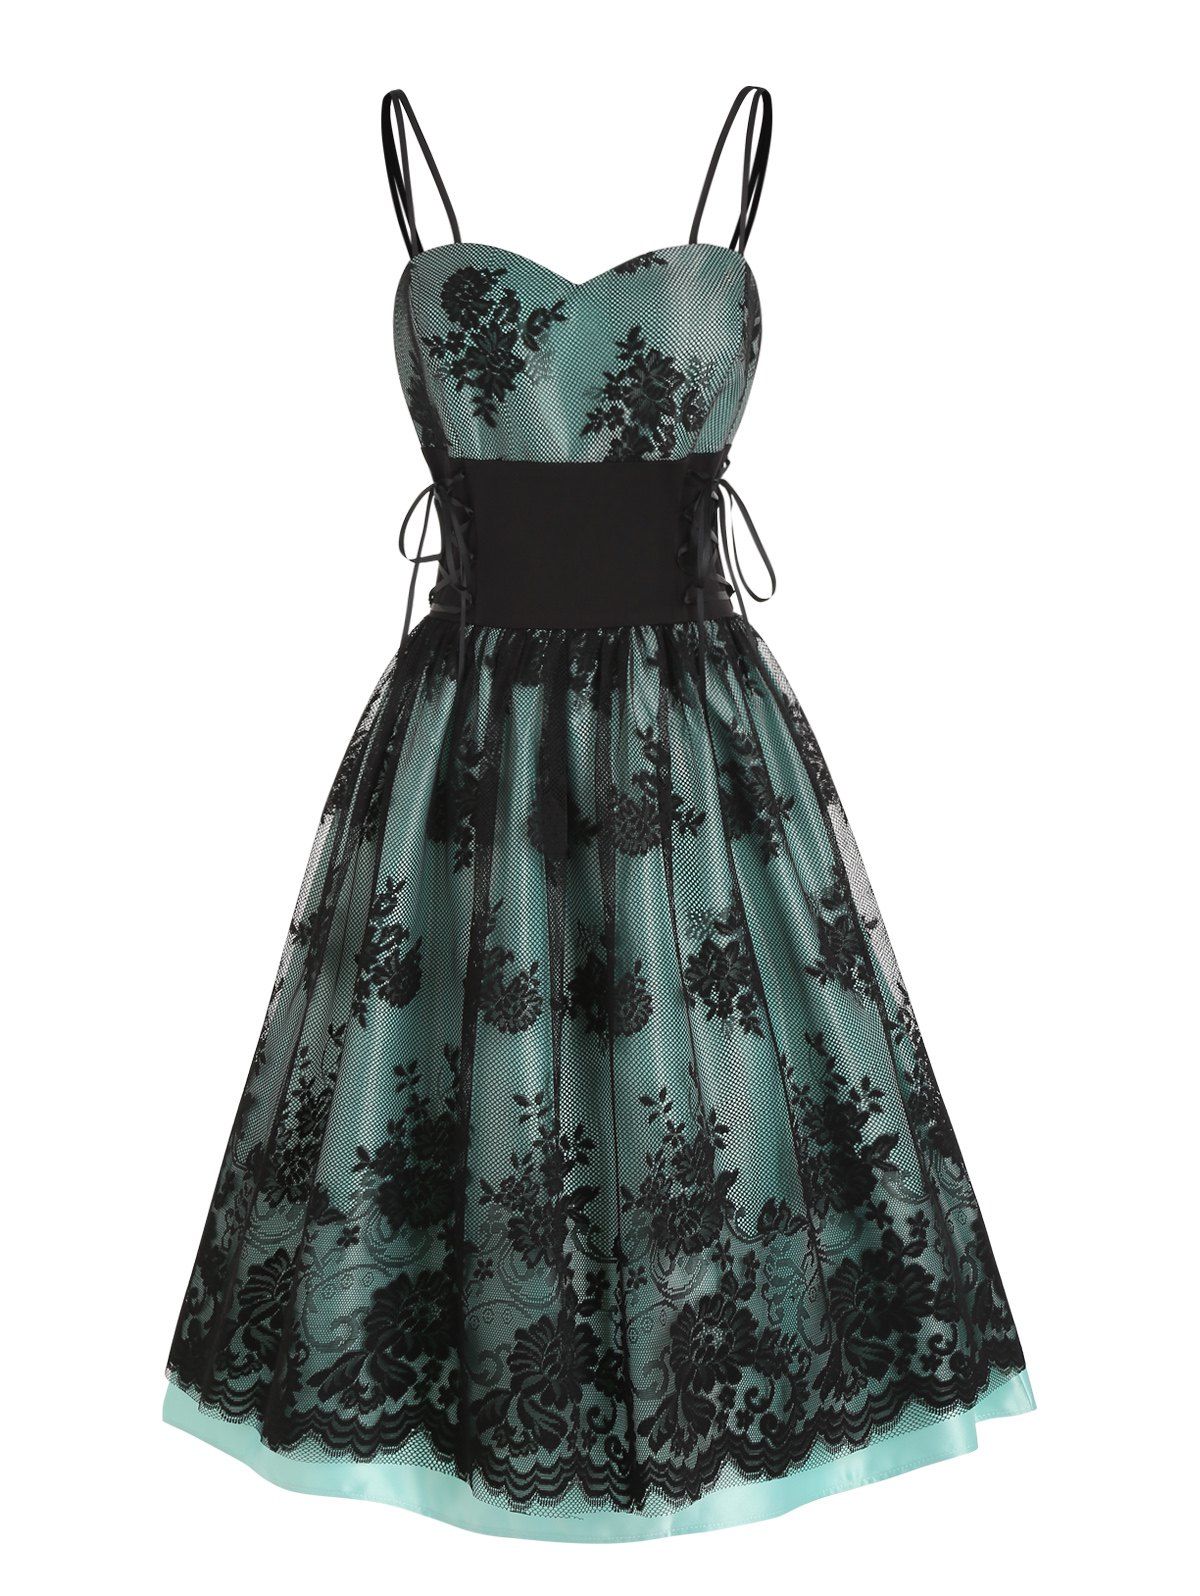 Party Dress Rose Lace Overlay Lace Up Sleeveless Spaghetti Strap High Waist A Line Midi Prom Dress - GREEN 2XL